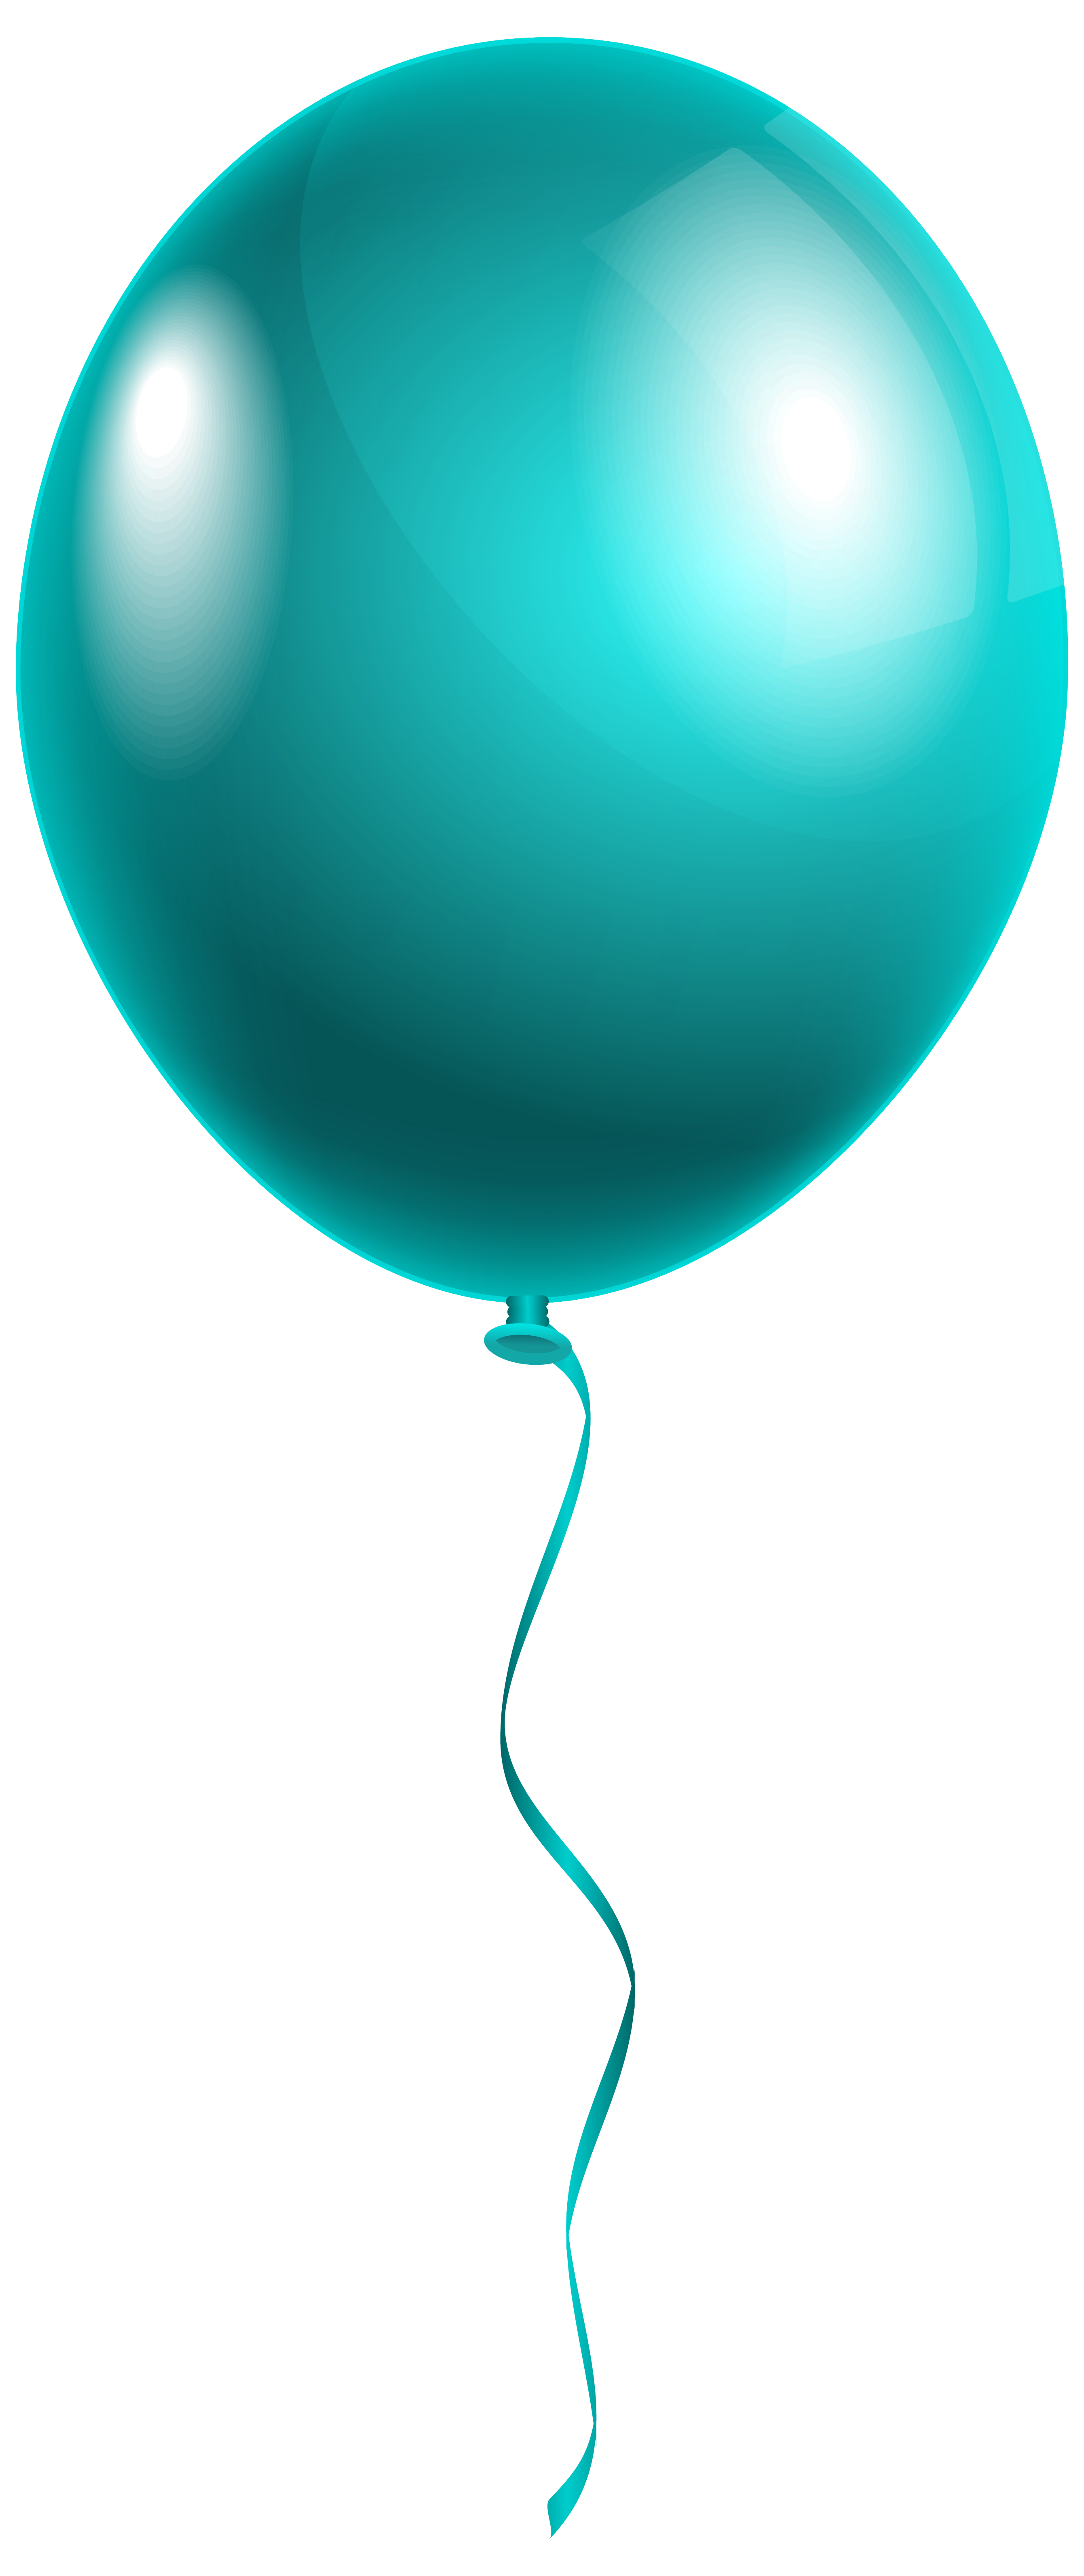 Balloon PNG Transparent Image